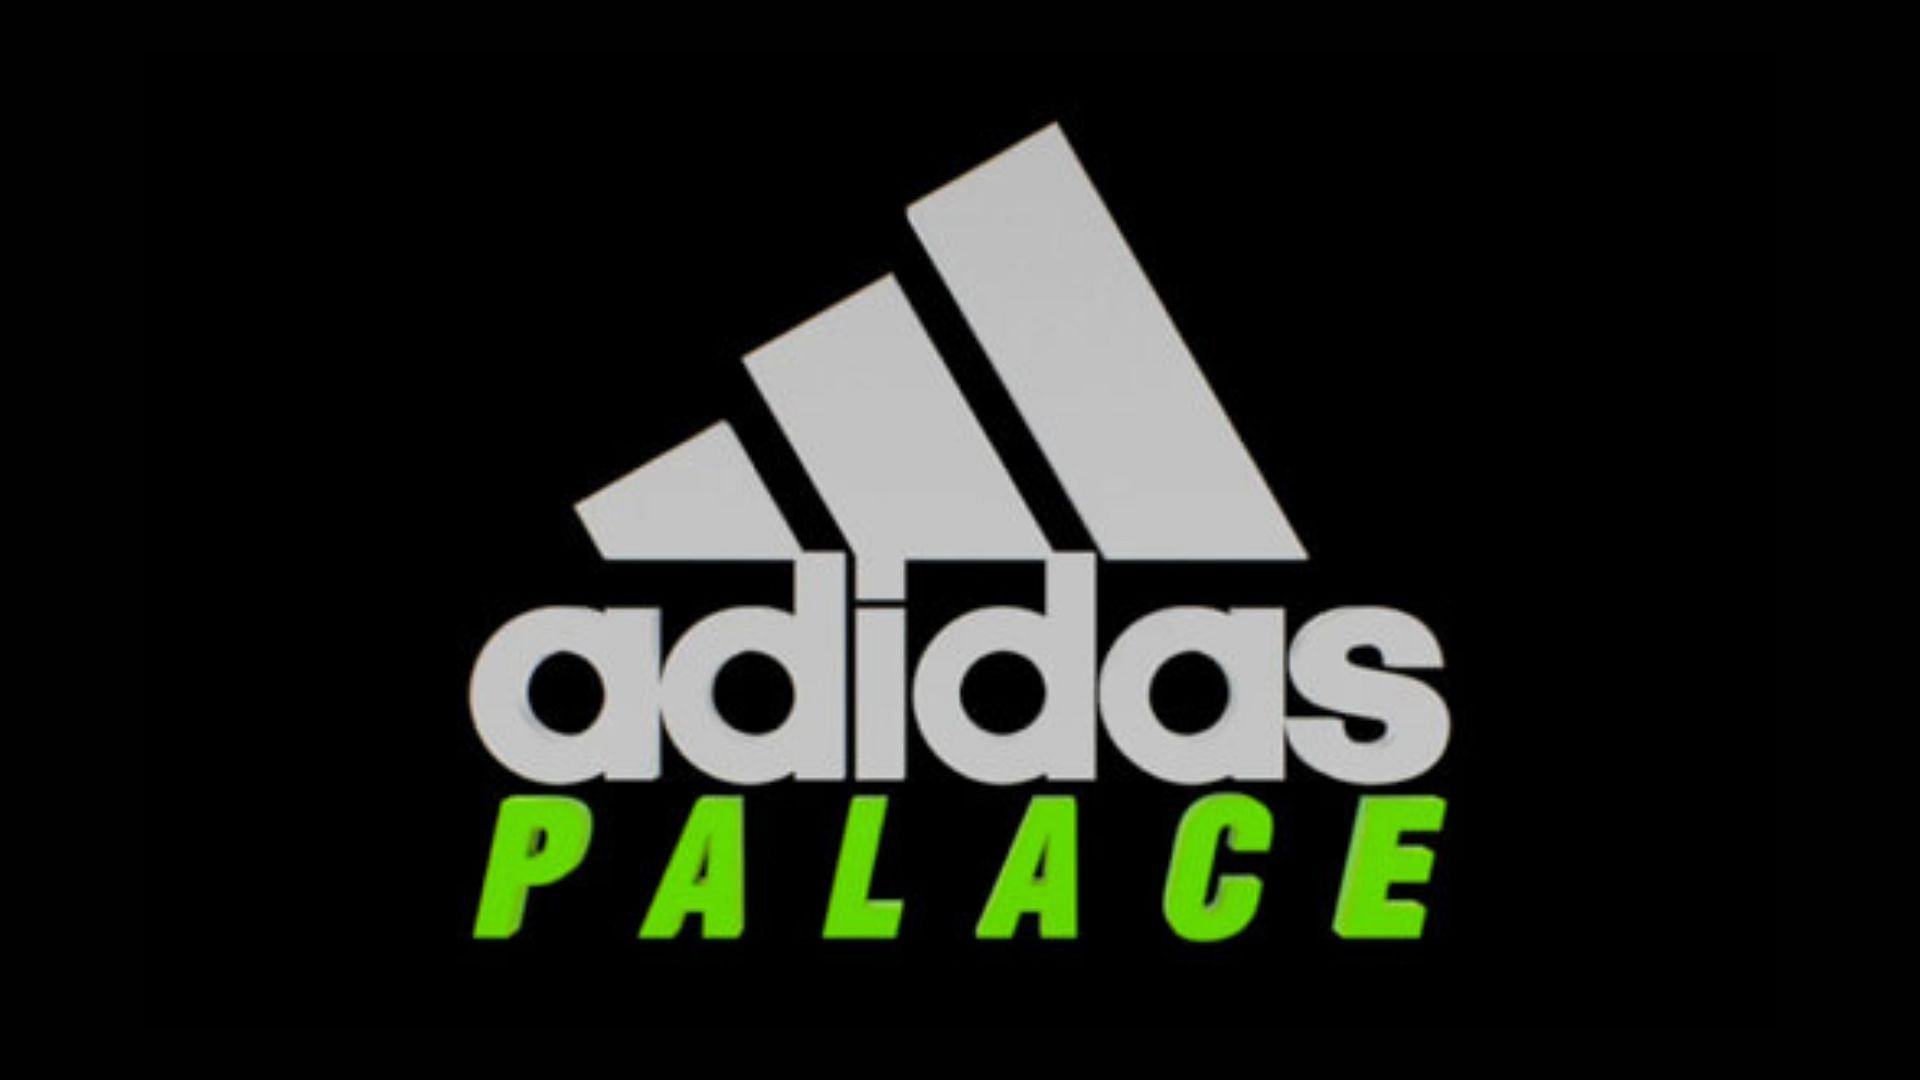 Palace x Adidas Fall 2022 collection (Image via Highsnobiety)